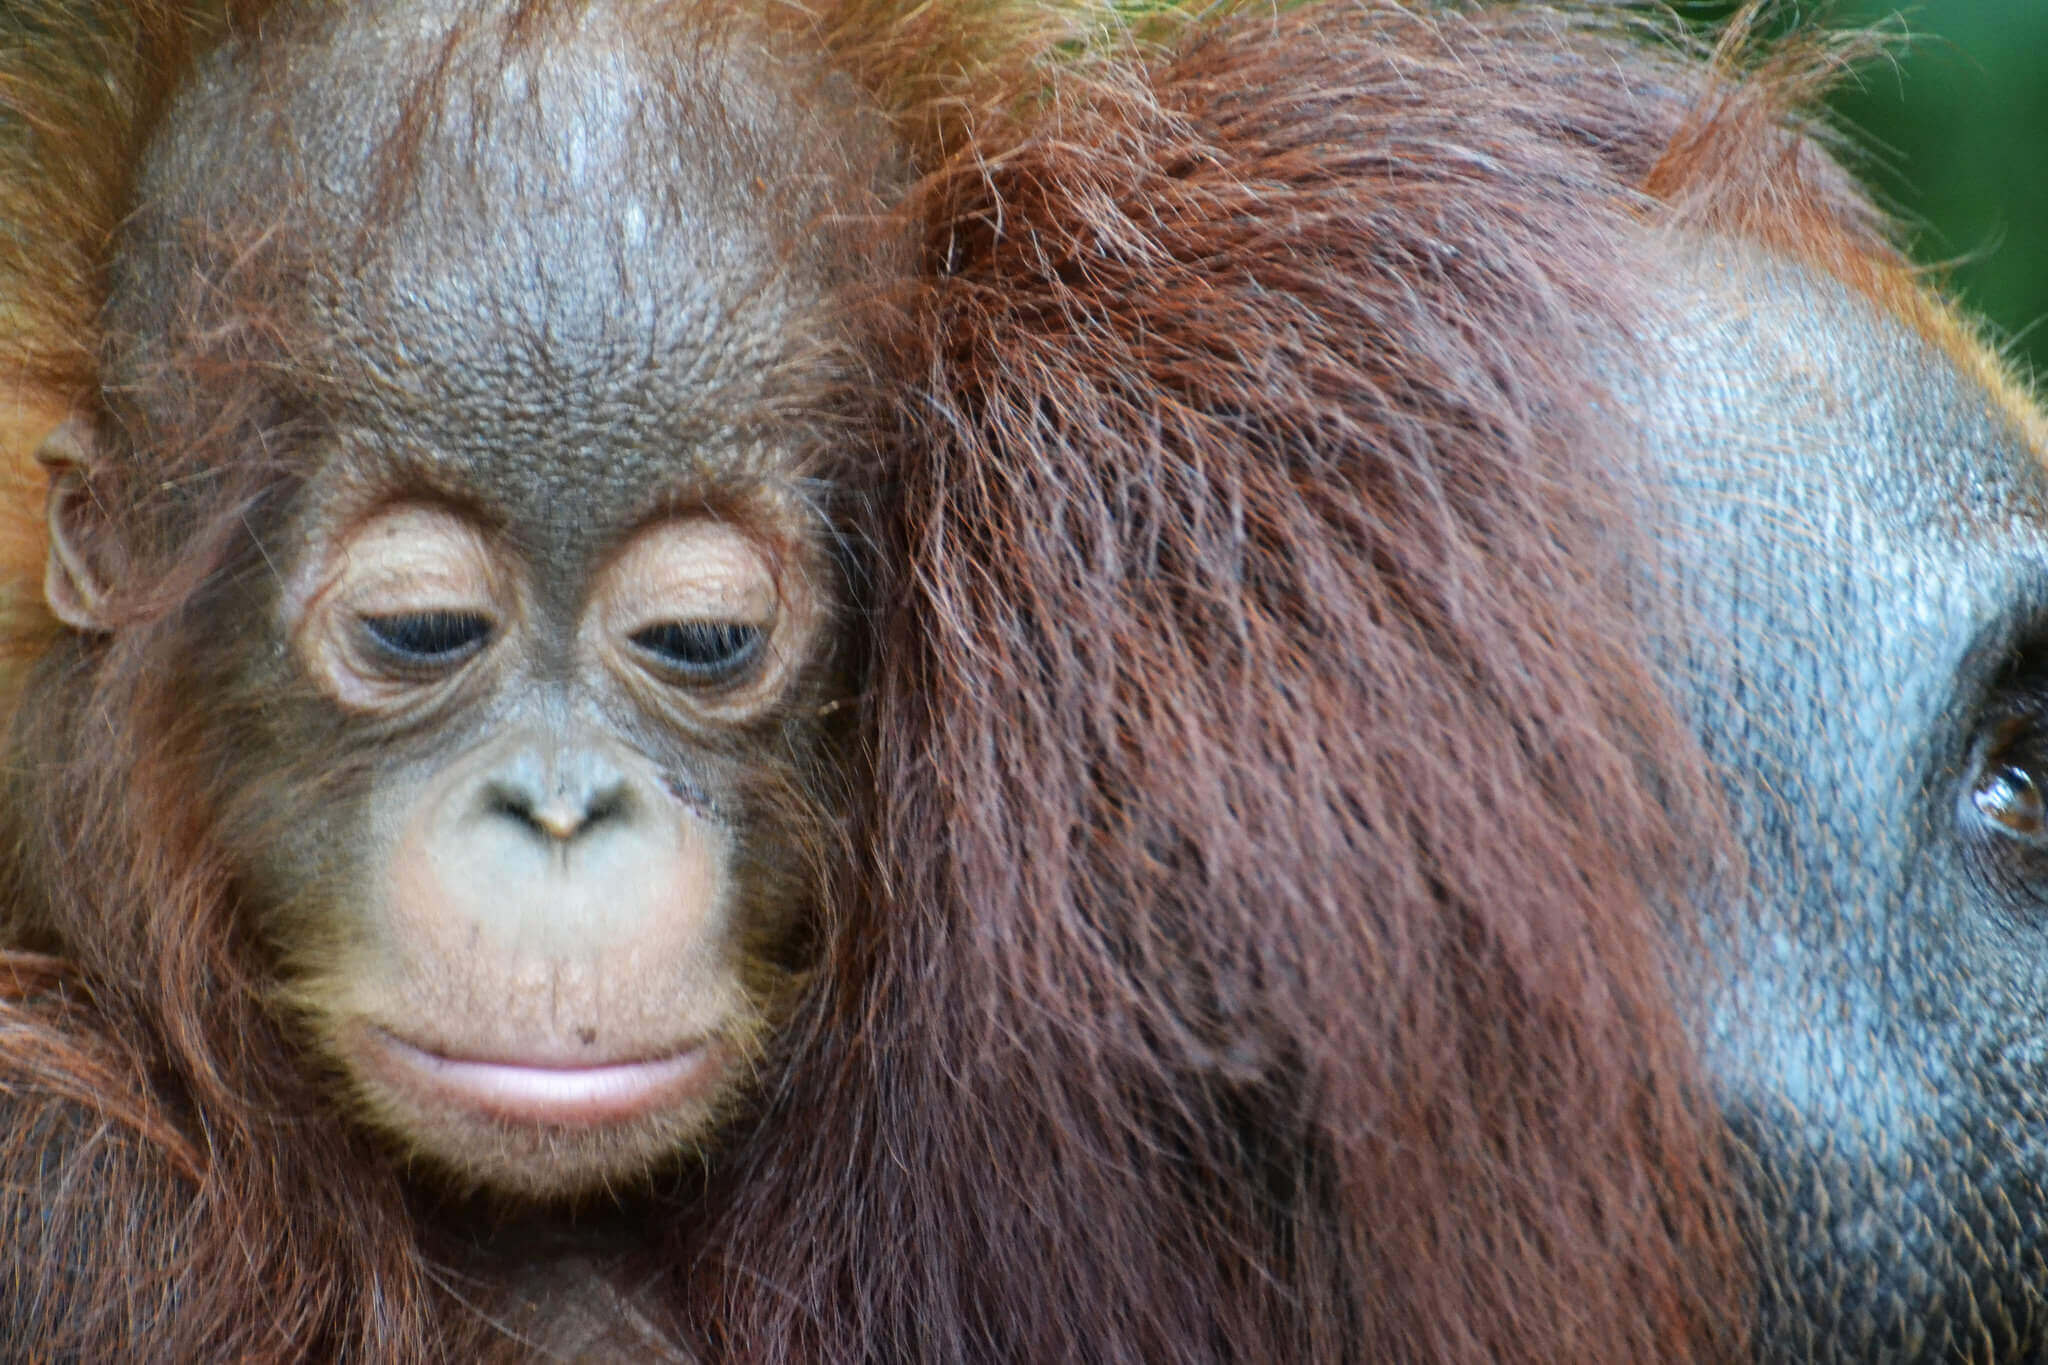 Uljin,Victor-TanjungPuting-Orangutan4 - 